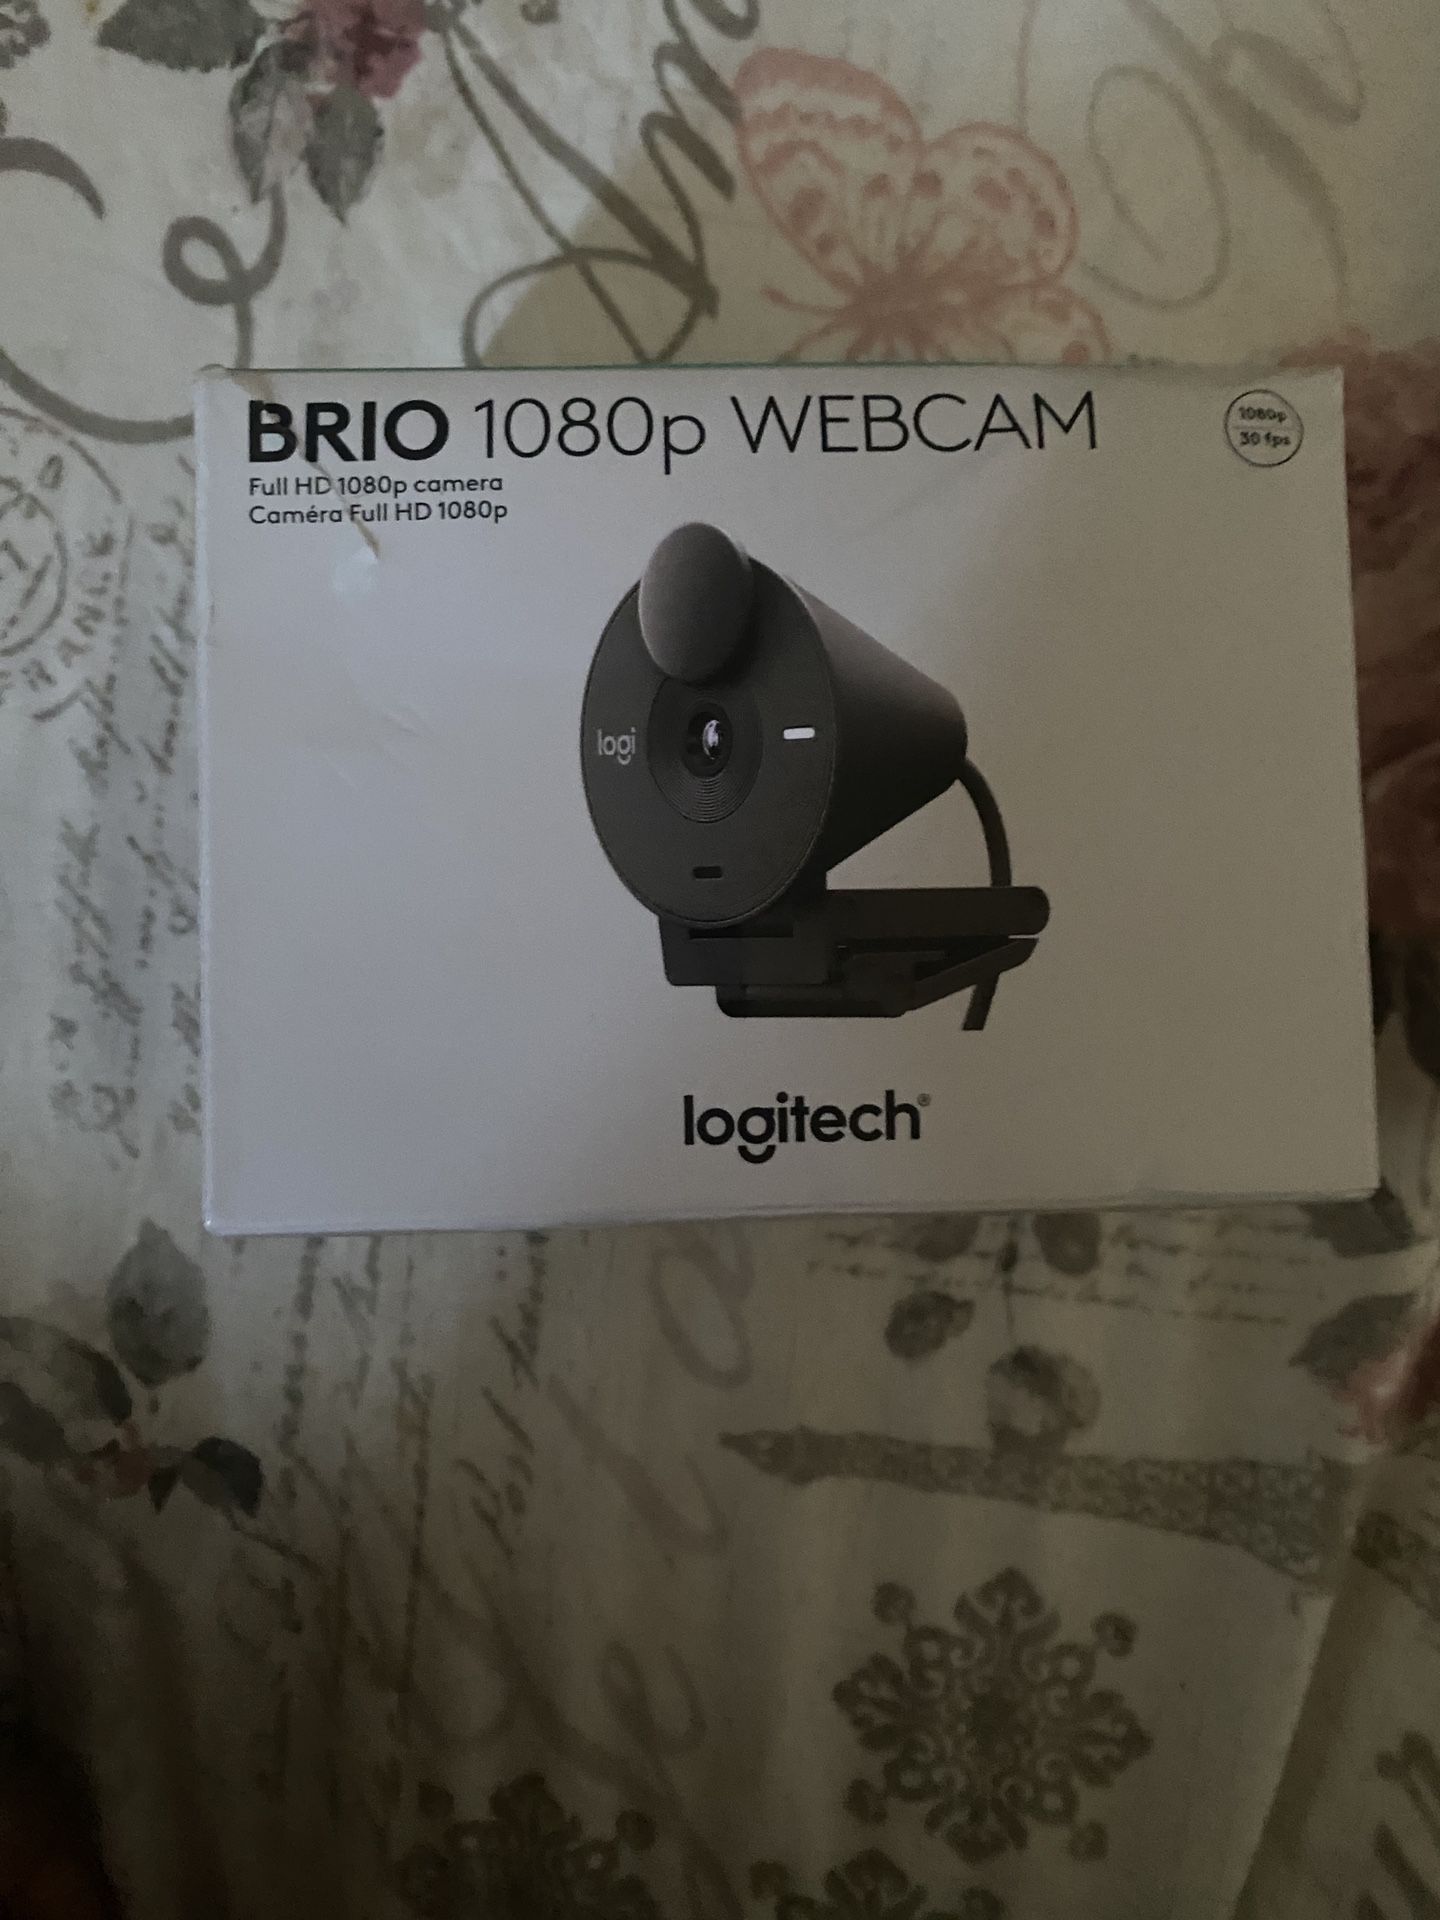 Longitech Brio 1080p